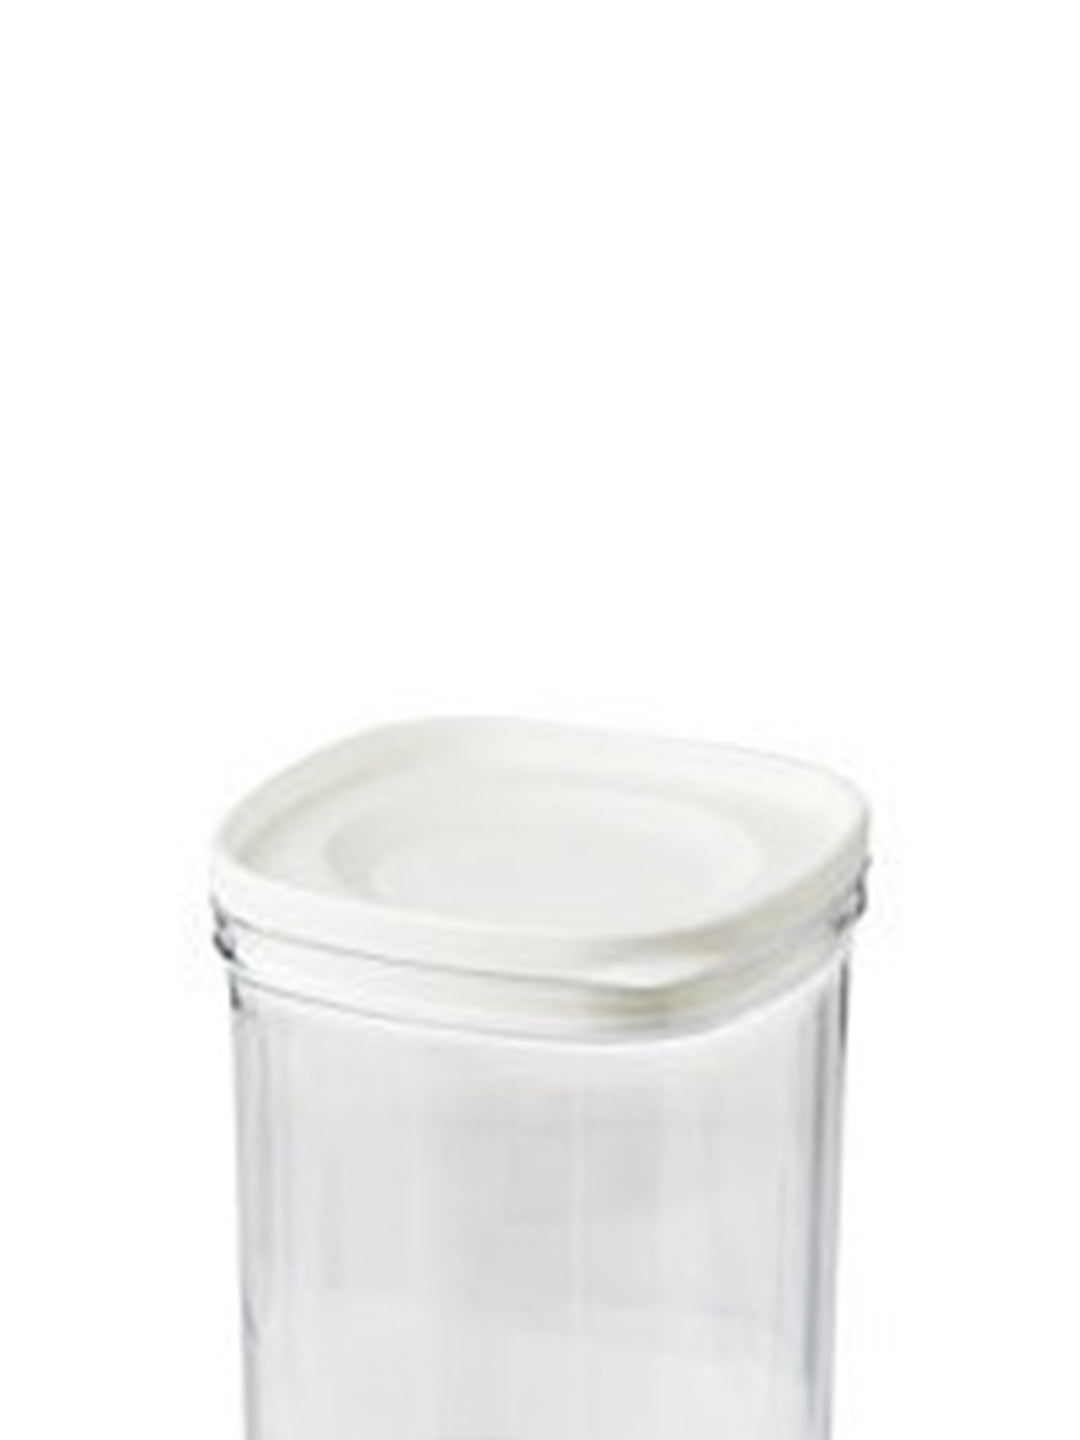 VON CASA Kitchen Cabinet Medium Airtight Plastic Containers - White, Transparent